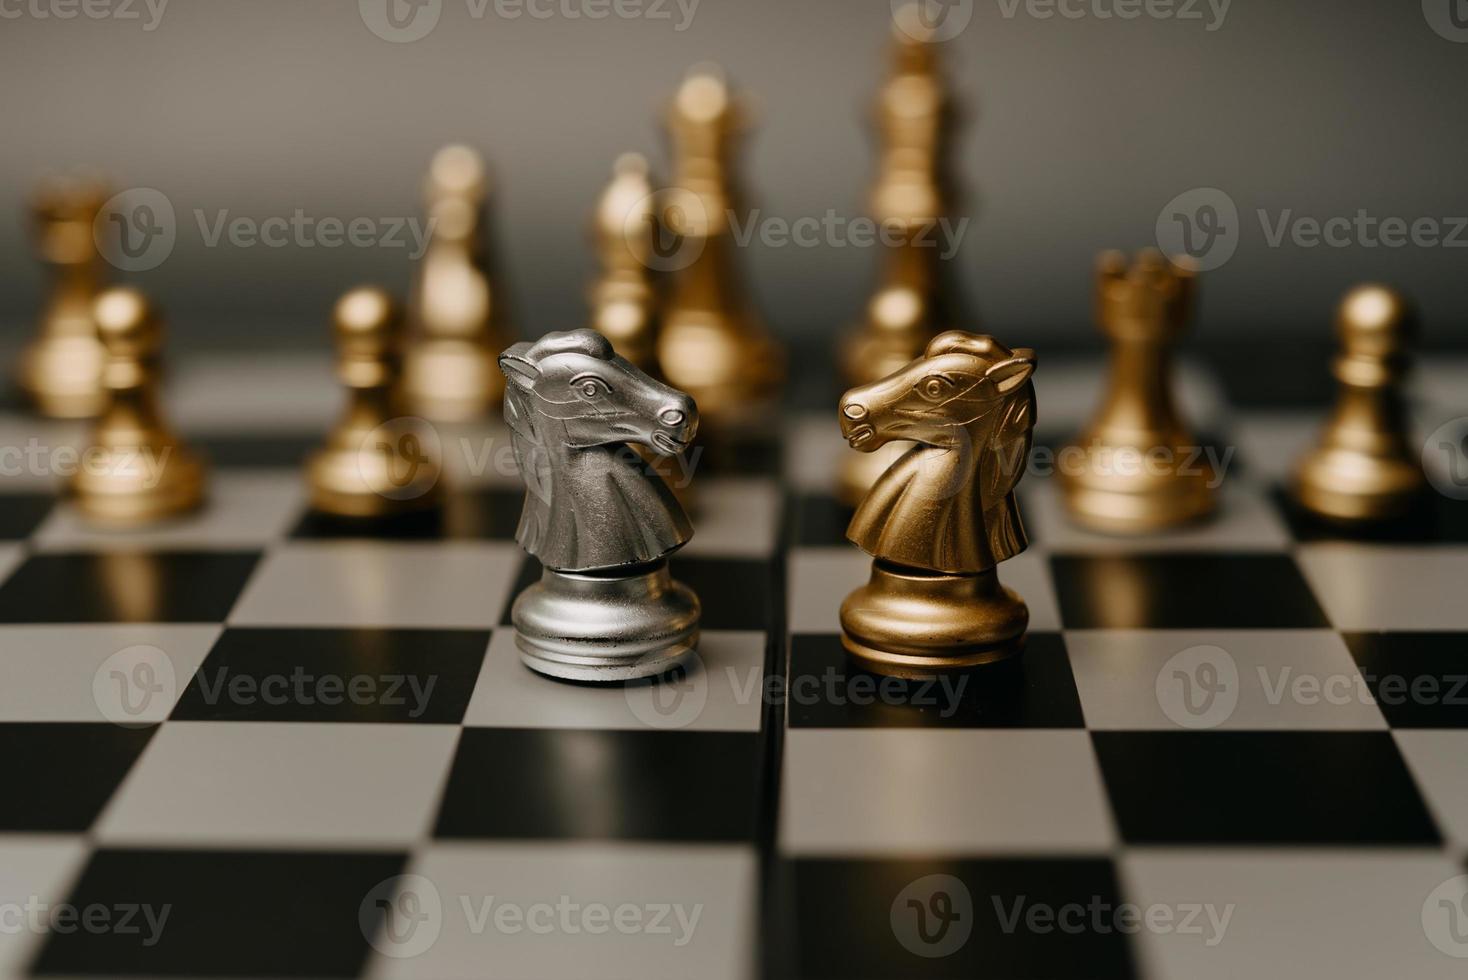 jogo de tabuleiro de xadrez de dois cavalos. planejamento de